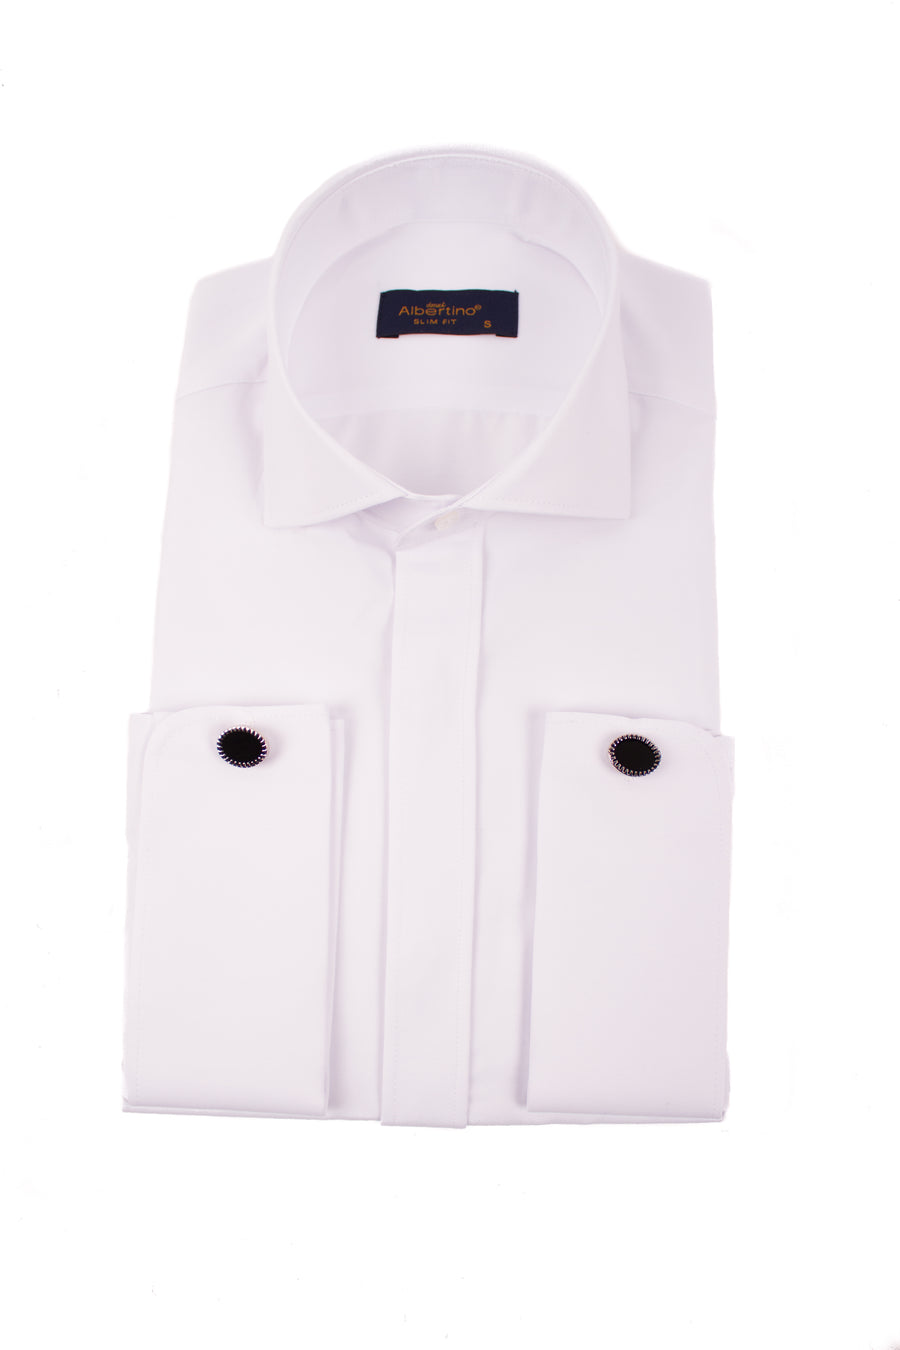 White Double Cuff Shirt - Gentlemen's Crate